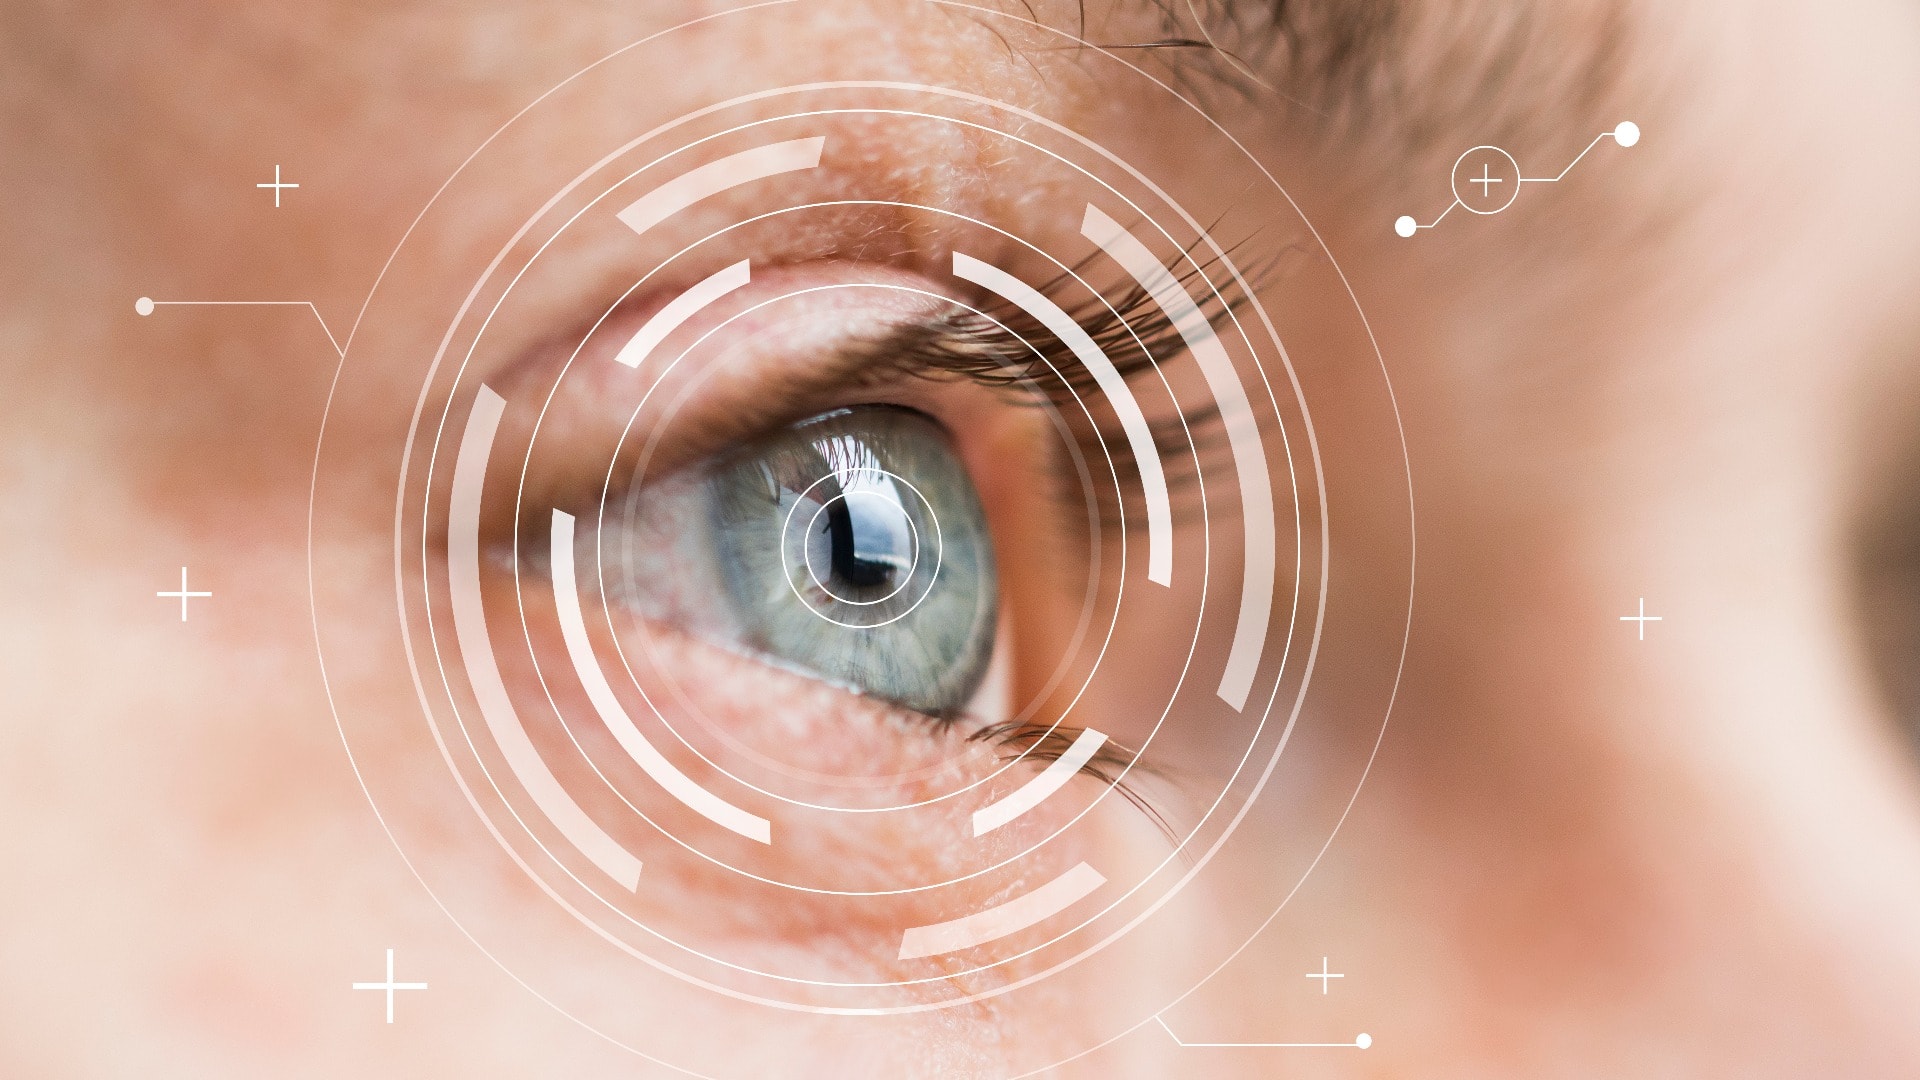 Eye monitoring and treatment in medical. Biometric scan of male eye closeup.